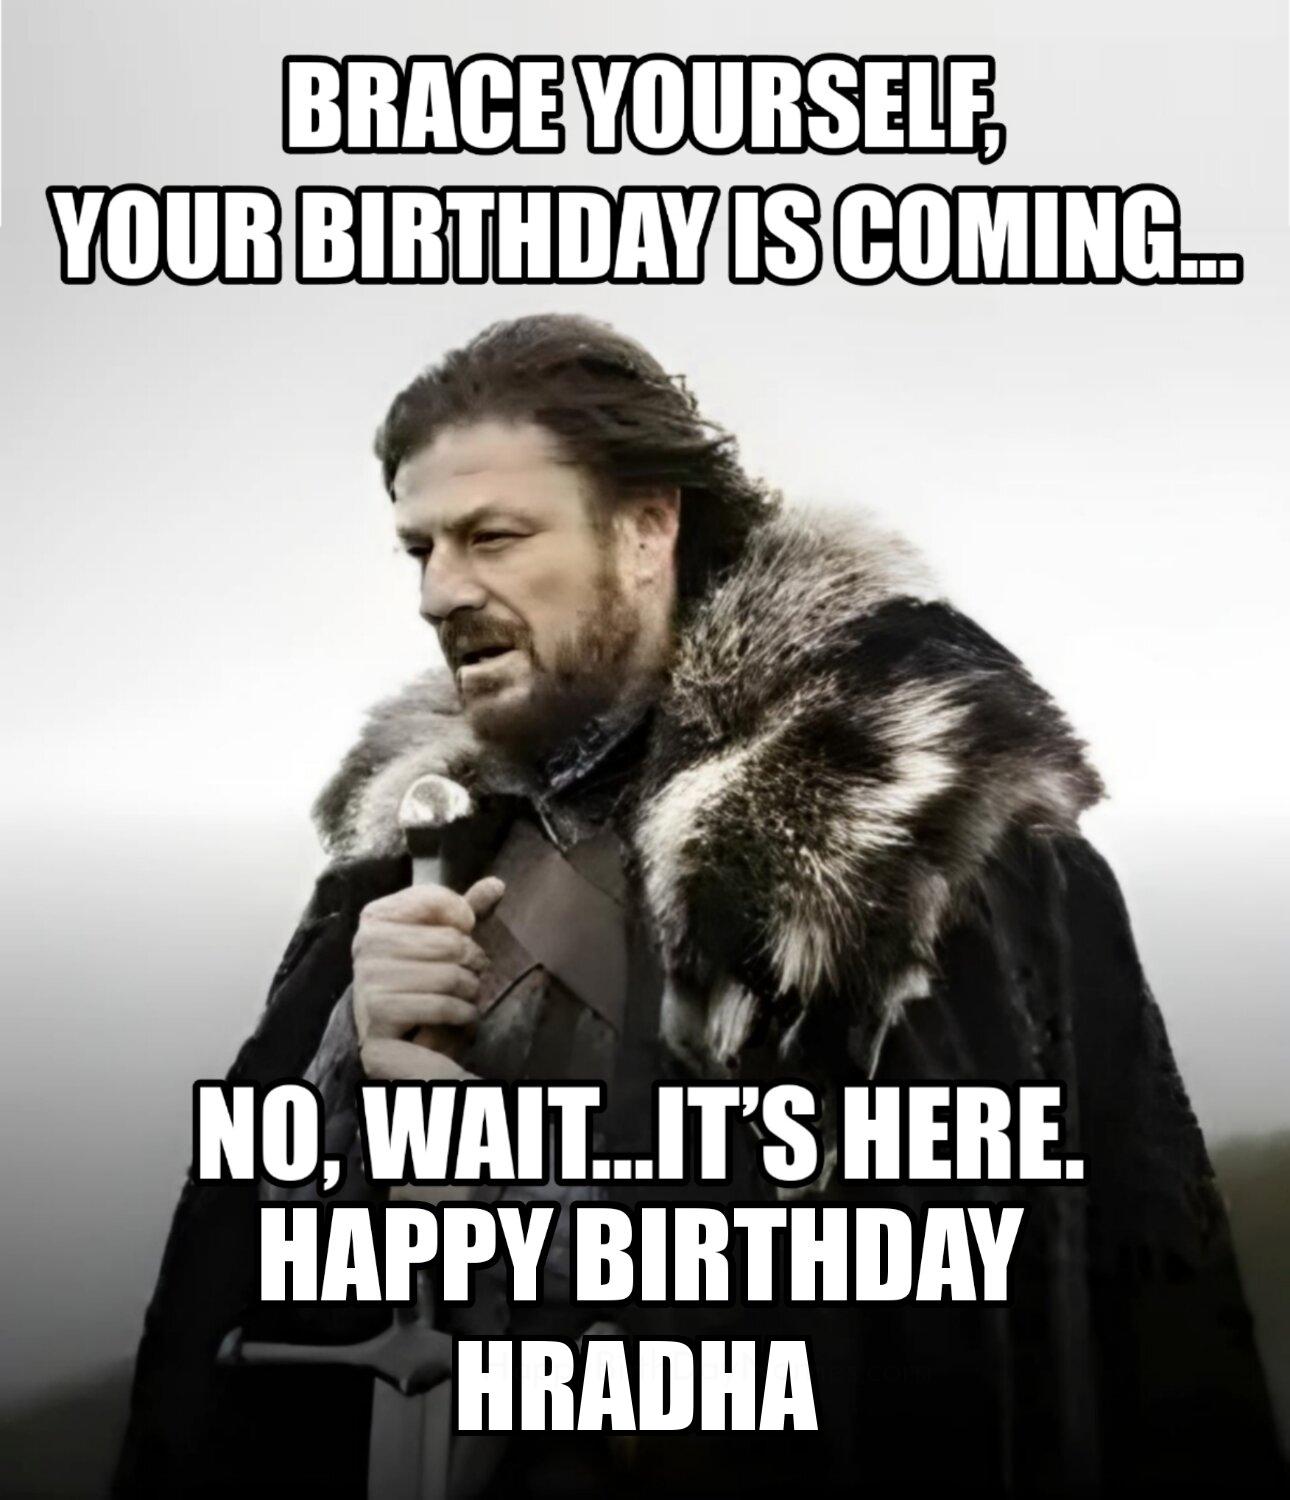 Happy Birthday Hradha Brace Yourself Your Birthday Is Coming Meme